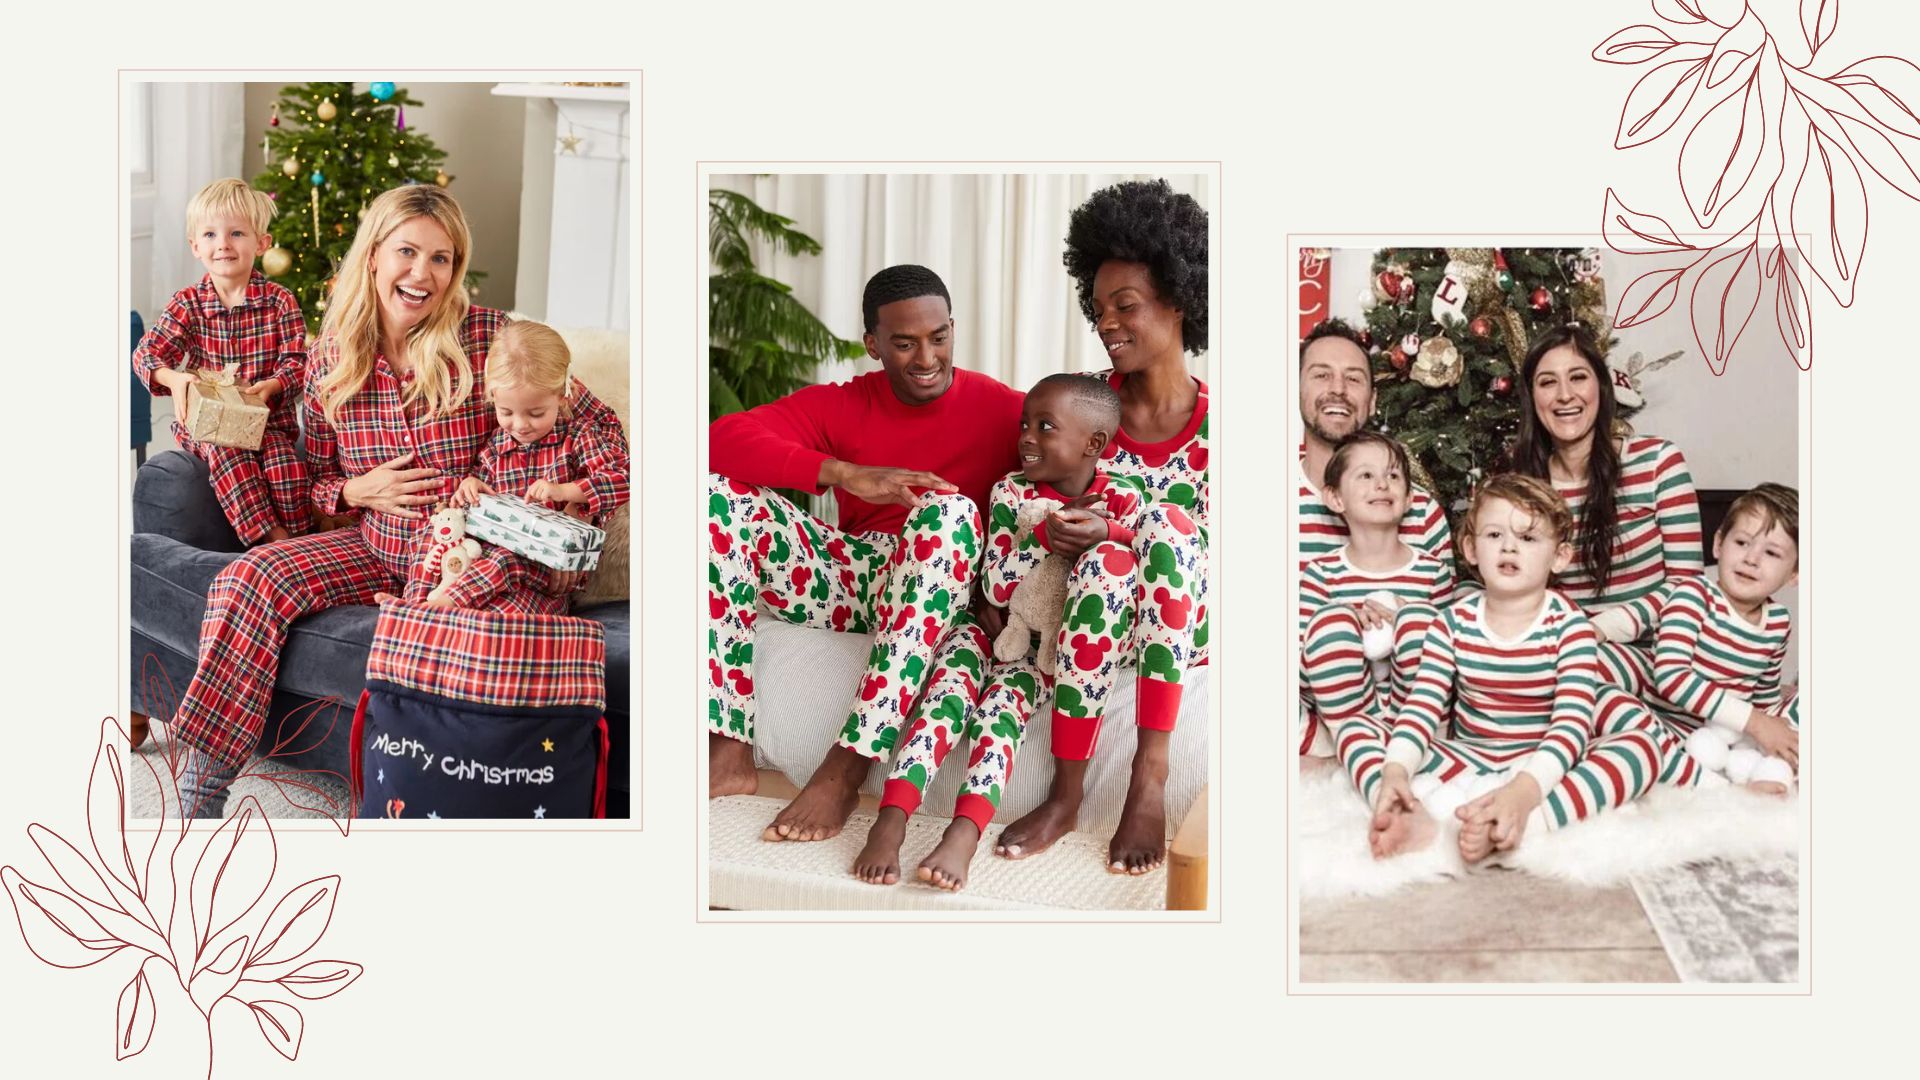 Macy's Family Pajamas Red footie Reindeer Pajamas  Toddlers/Kids/Men's/Women's